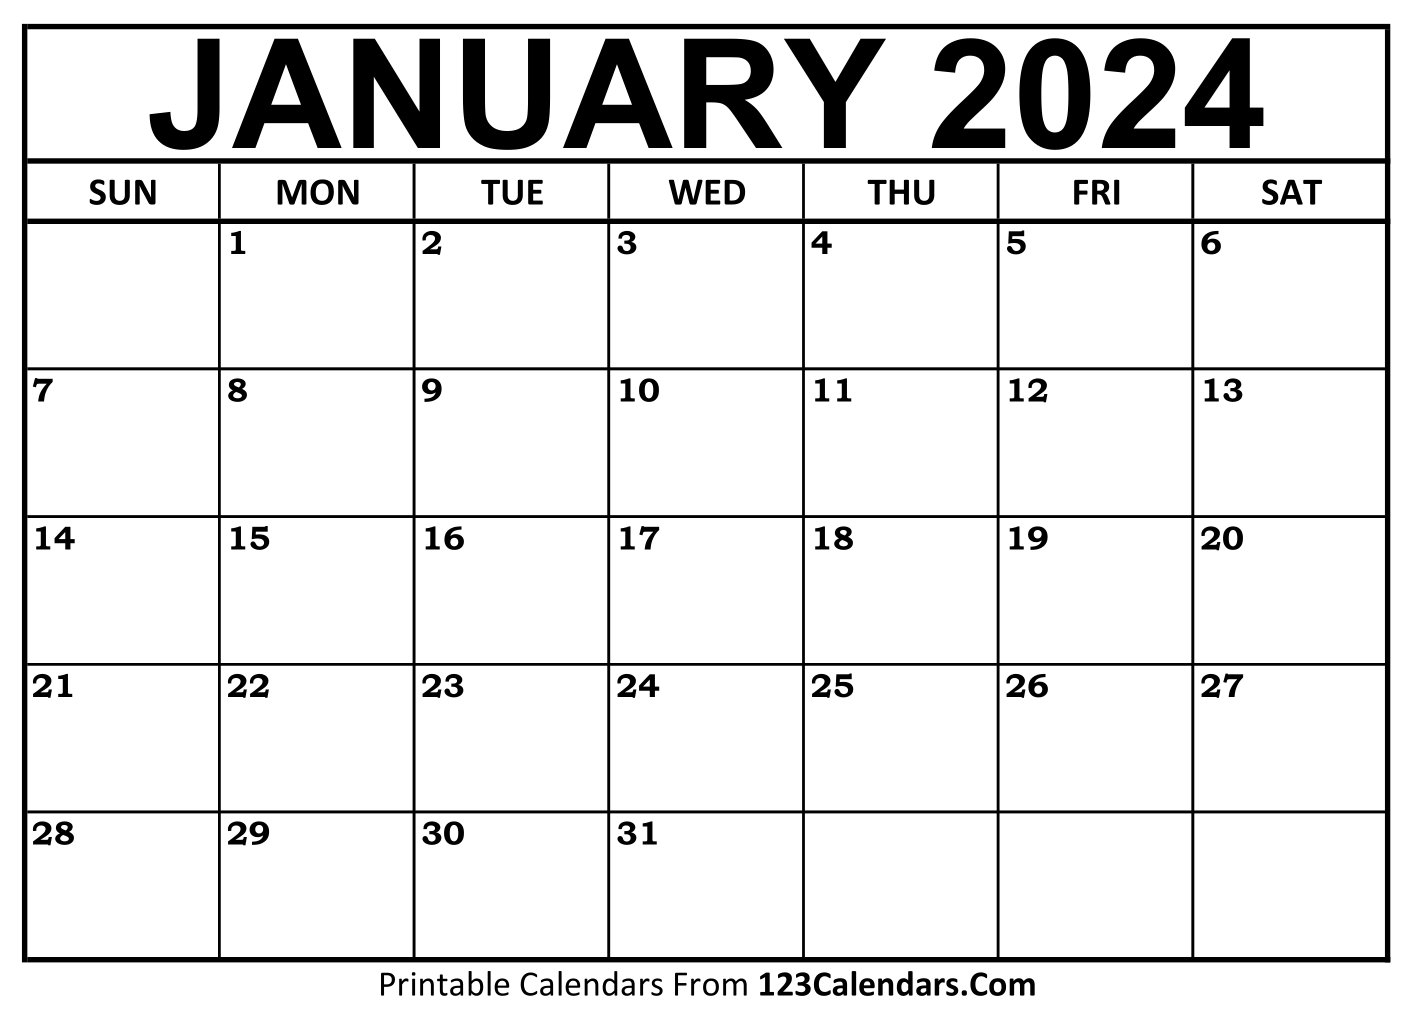 Printable January 2024 Calendar Templates - 123Calendars for A Printable Calendar January 2024